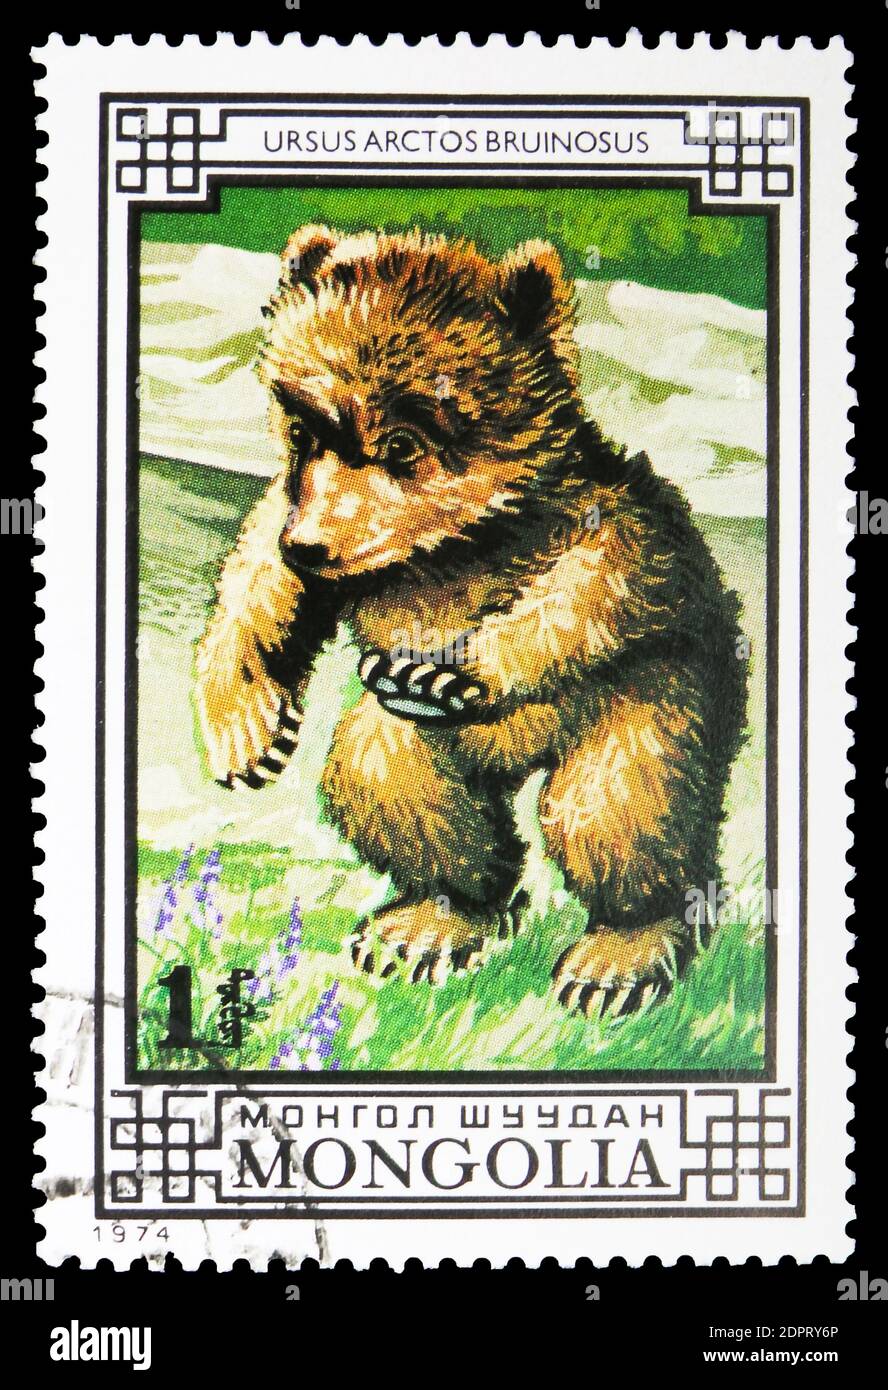 MOSCOW, RUSSIA - SEPTEMBER 26, 2018: A stamp printed in Mongolia shows Tibetan Blue Bear (Ursus arctos pruinosus), Bears serie, circa 1974 Stock Photo